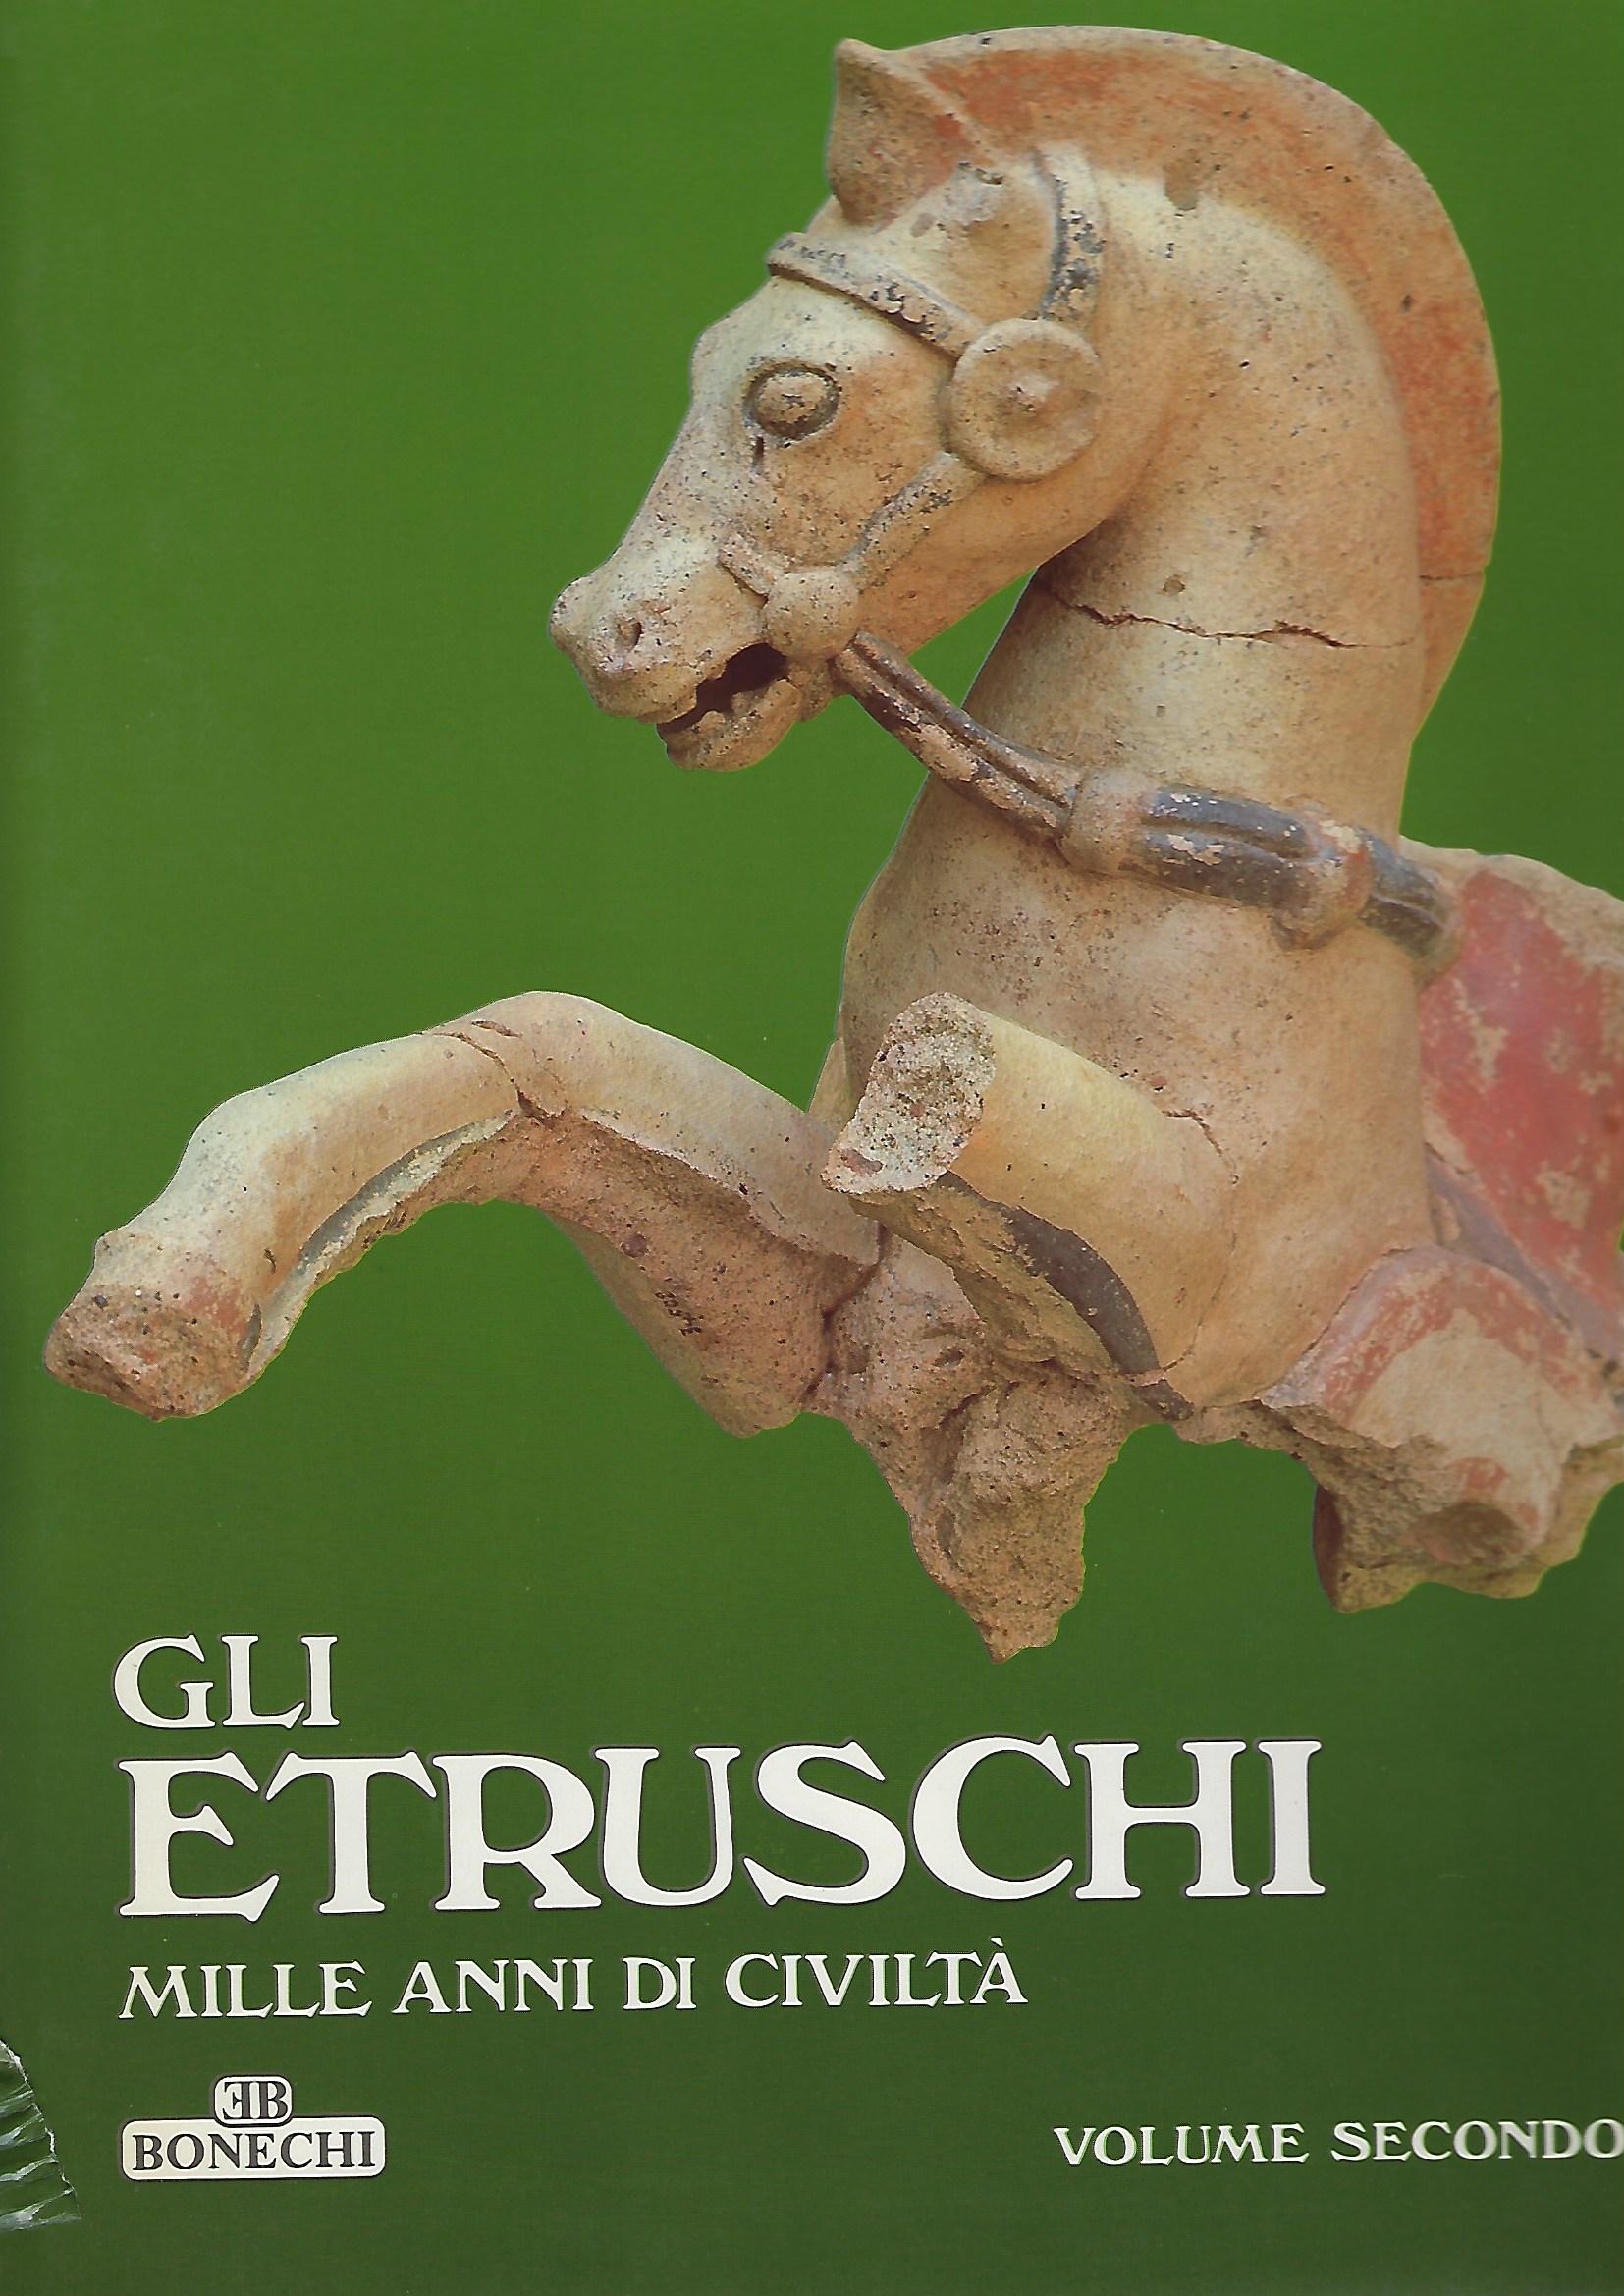 "Gli etruschi" "Mille anni di civiltà"